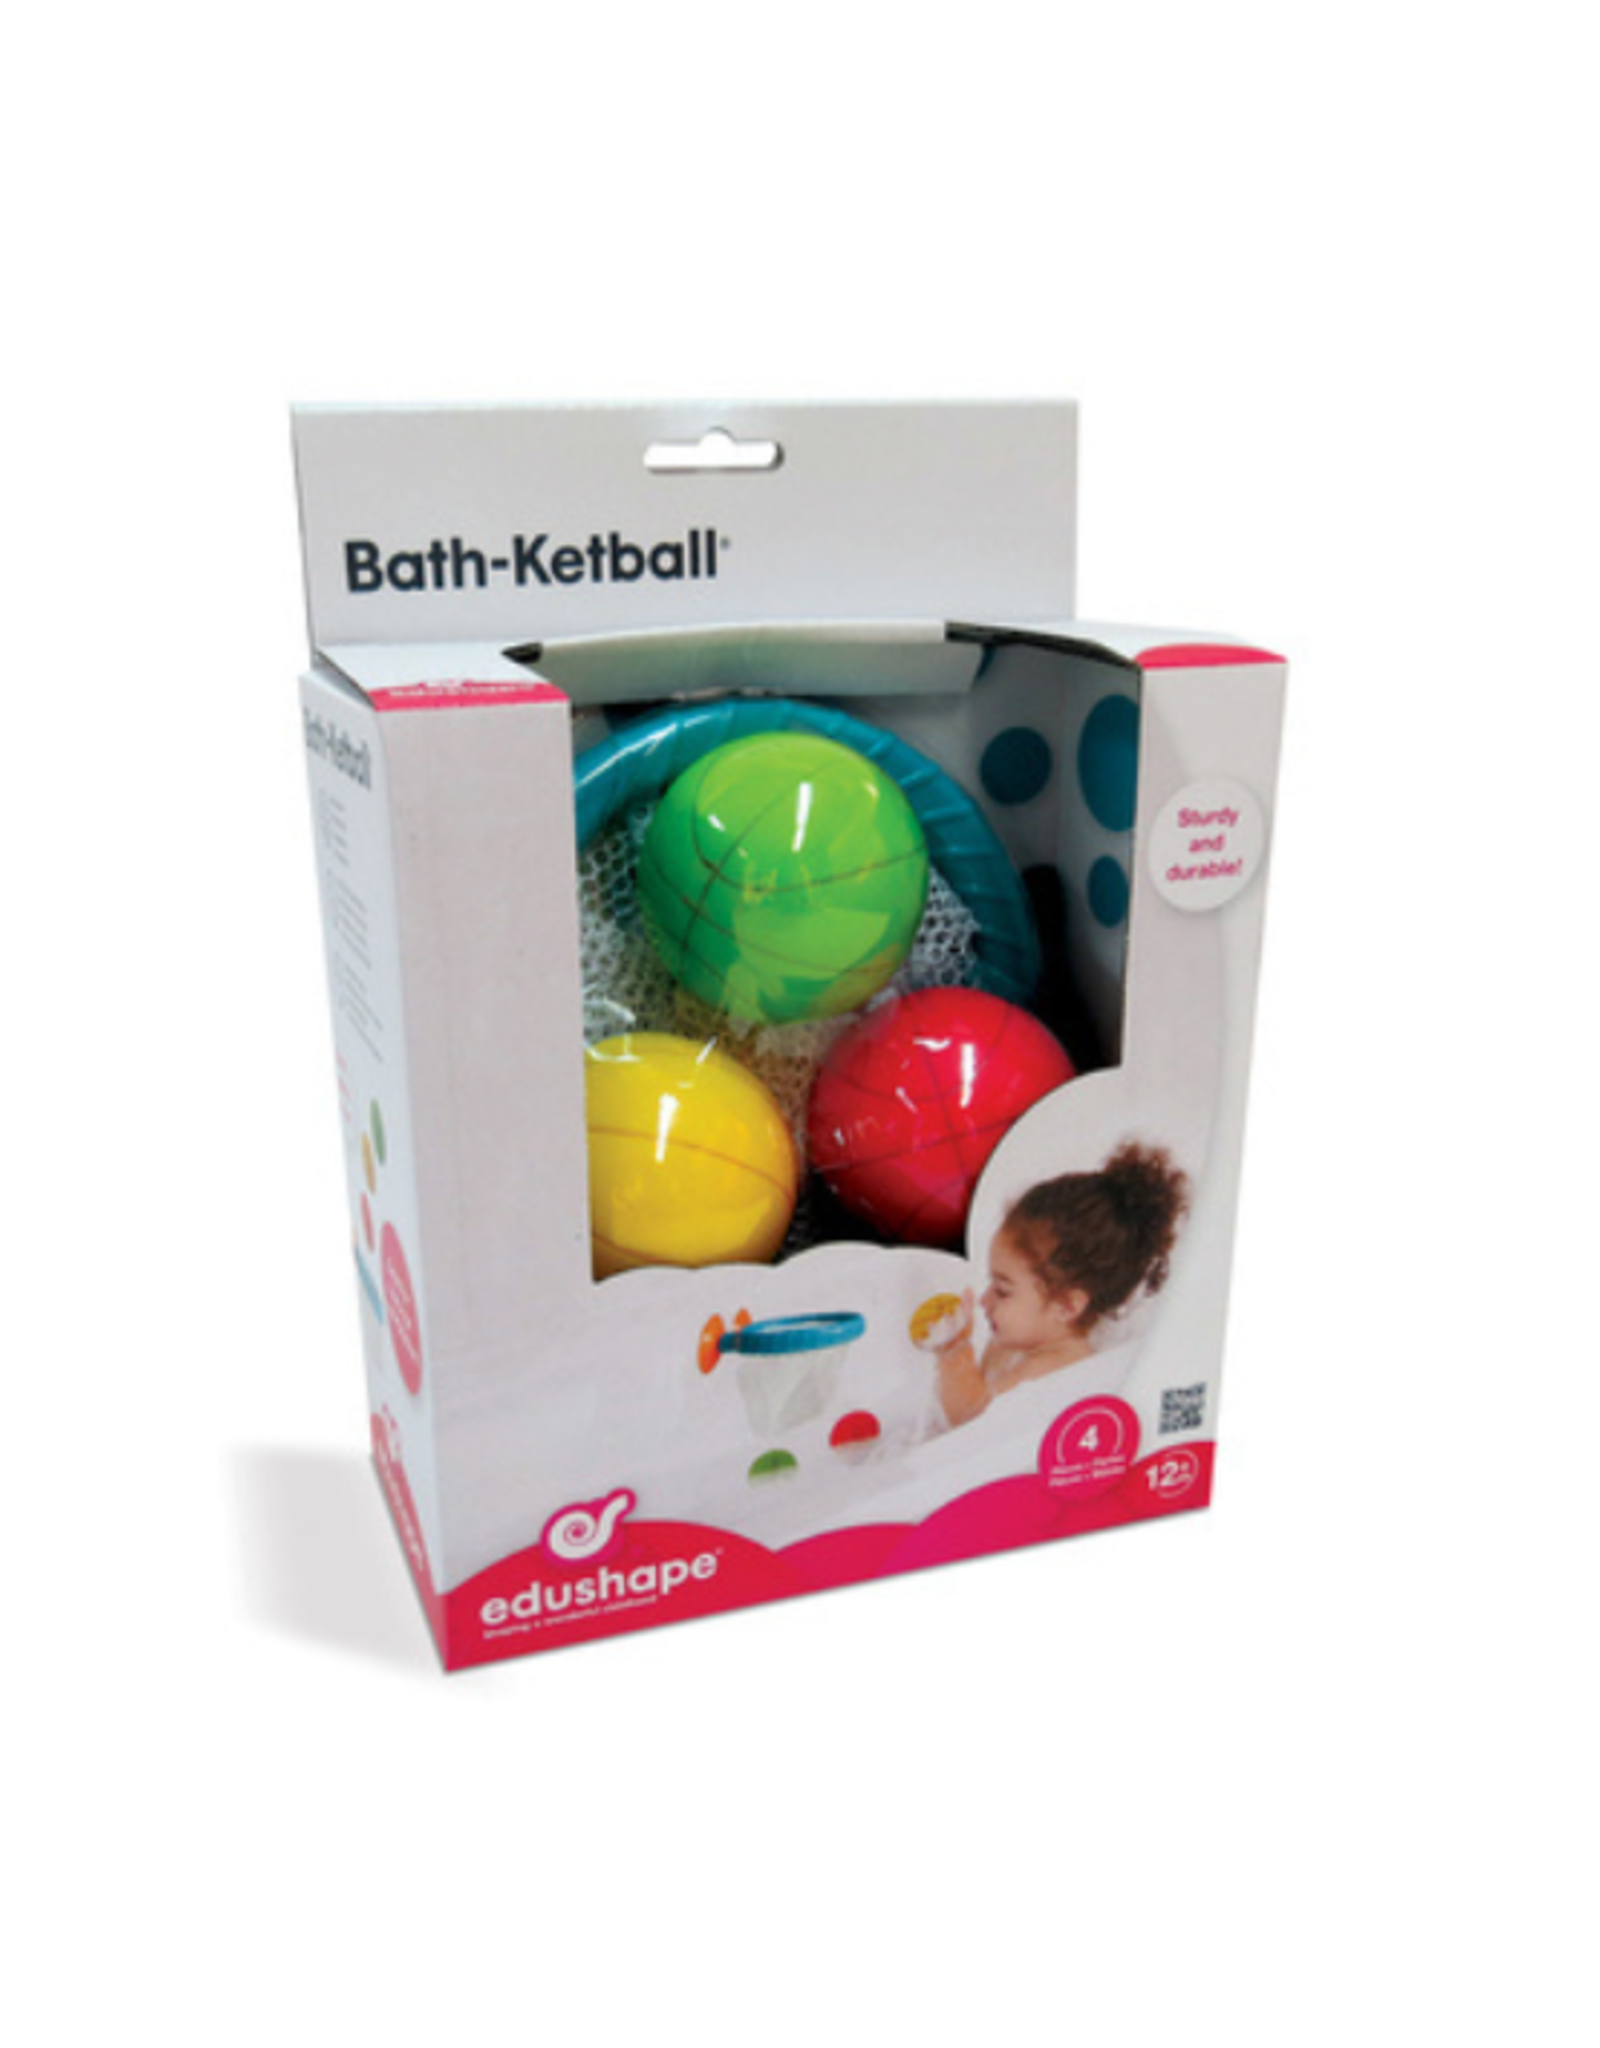 Edushape - Bath-Ketball Set